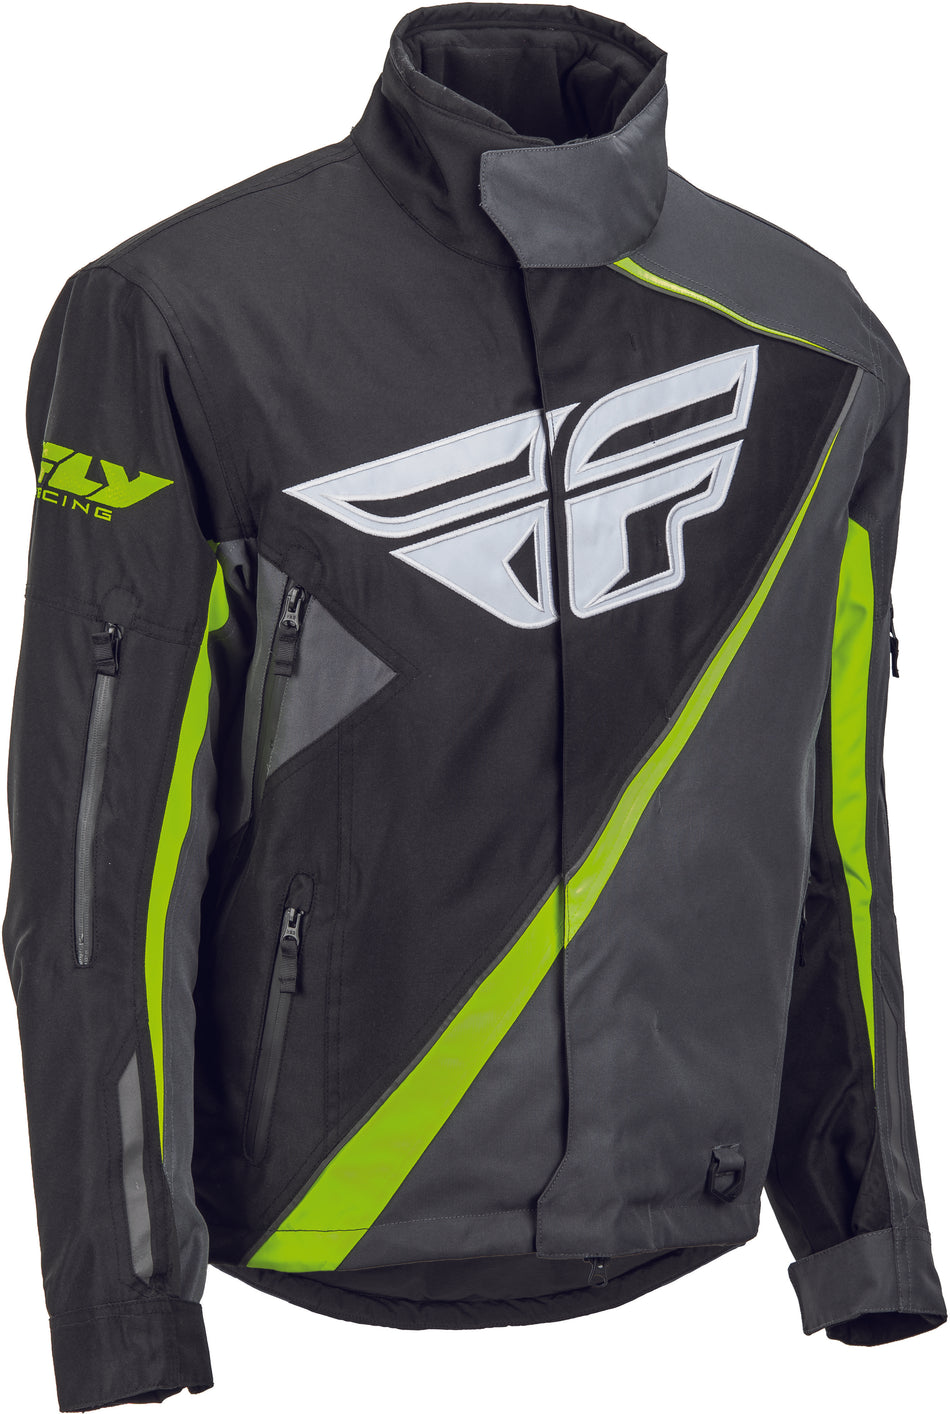 FLY RACING Snx Pro Jacket Black/Grey 2x 470-40862X